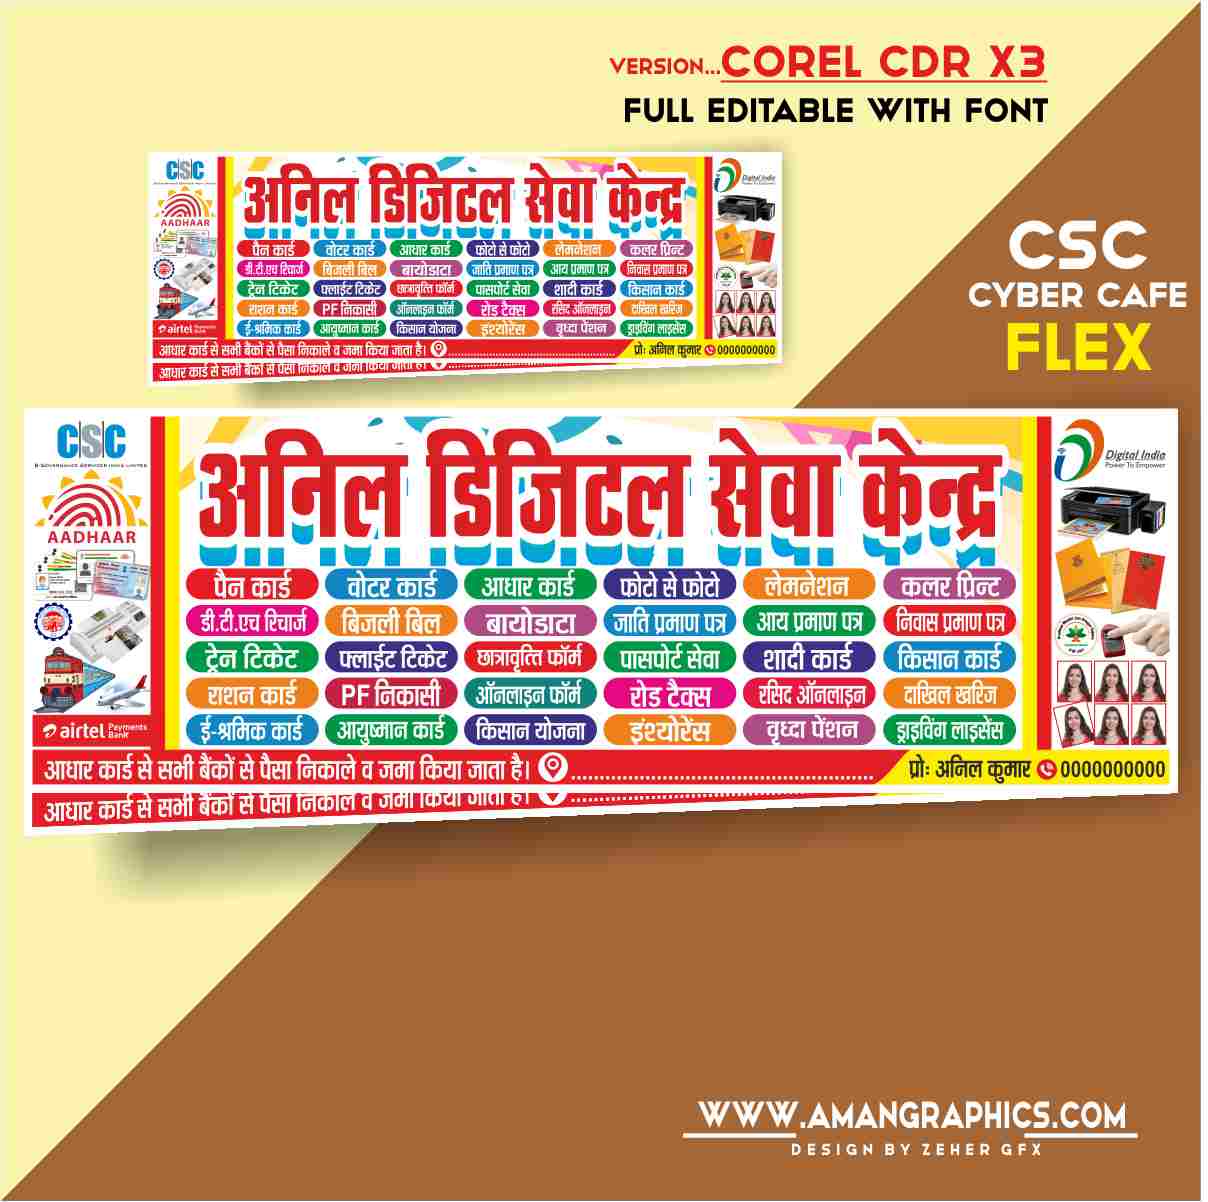 Anil Digital Seva Kendra (CSC) Cyber Cafe Banner Design Cdr File FLEX BANNER FLEX